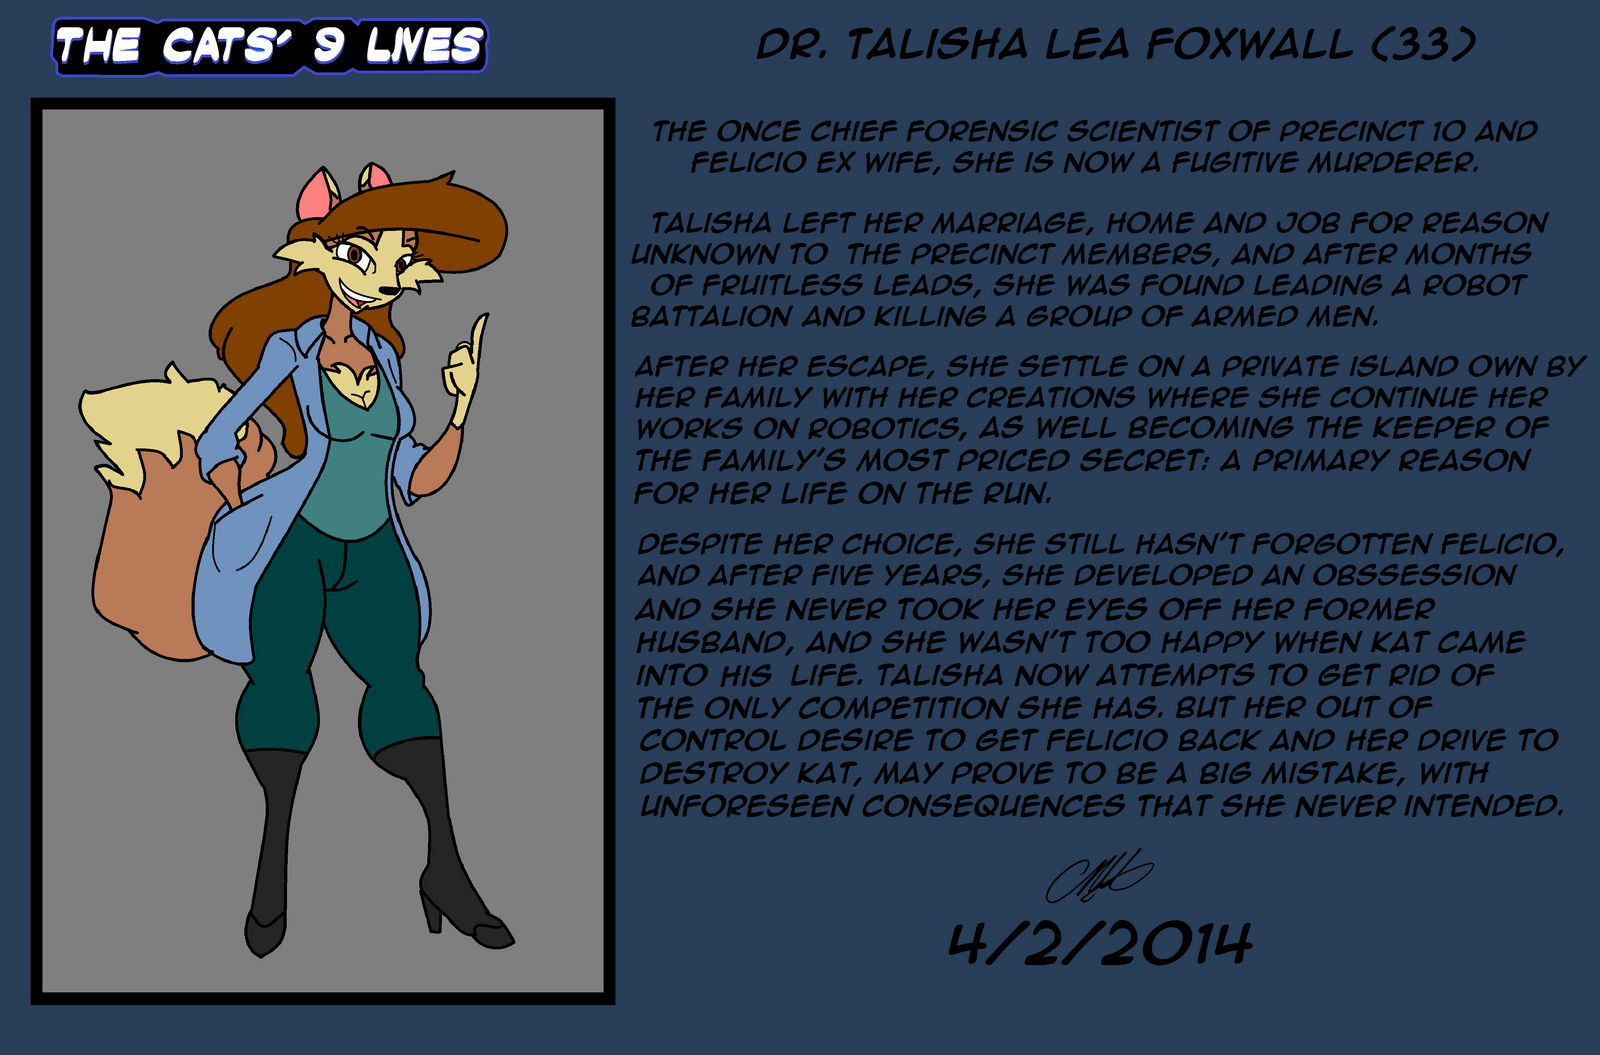 The Cat's 9 Lives! Bio Talisha Lea Foxwall